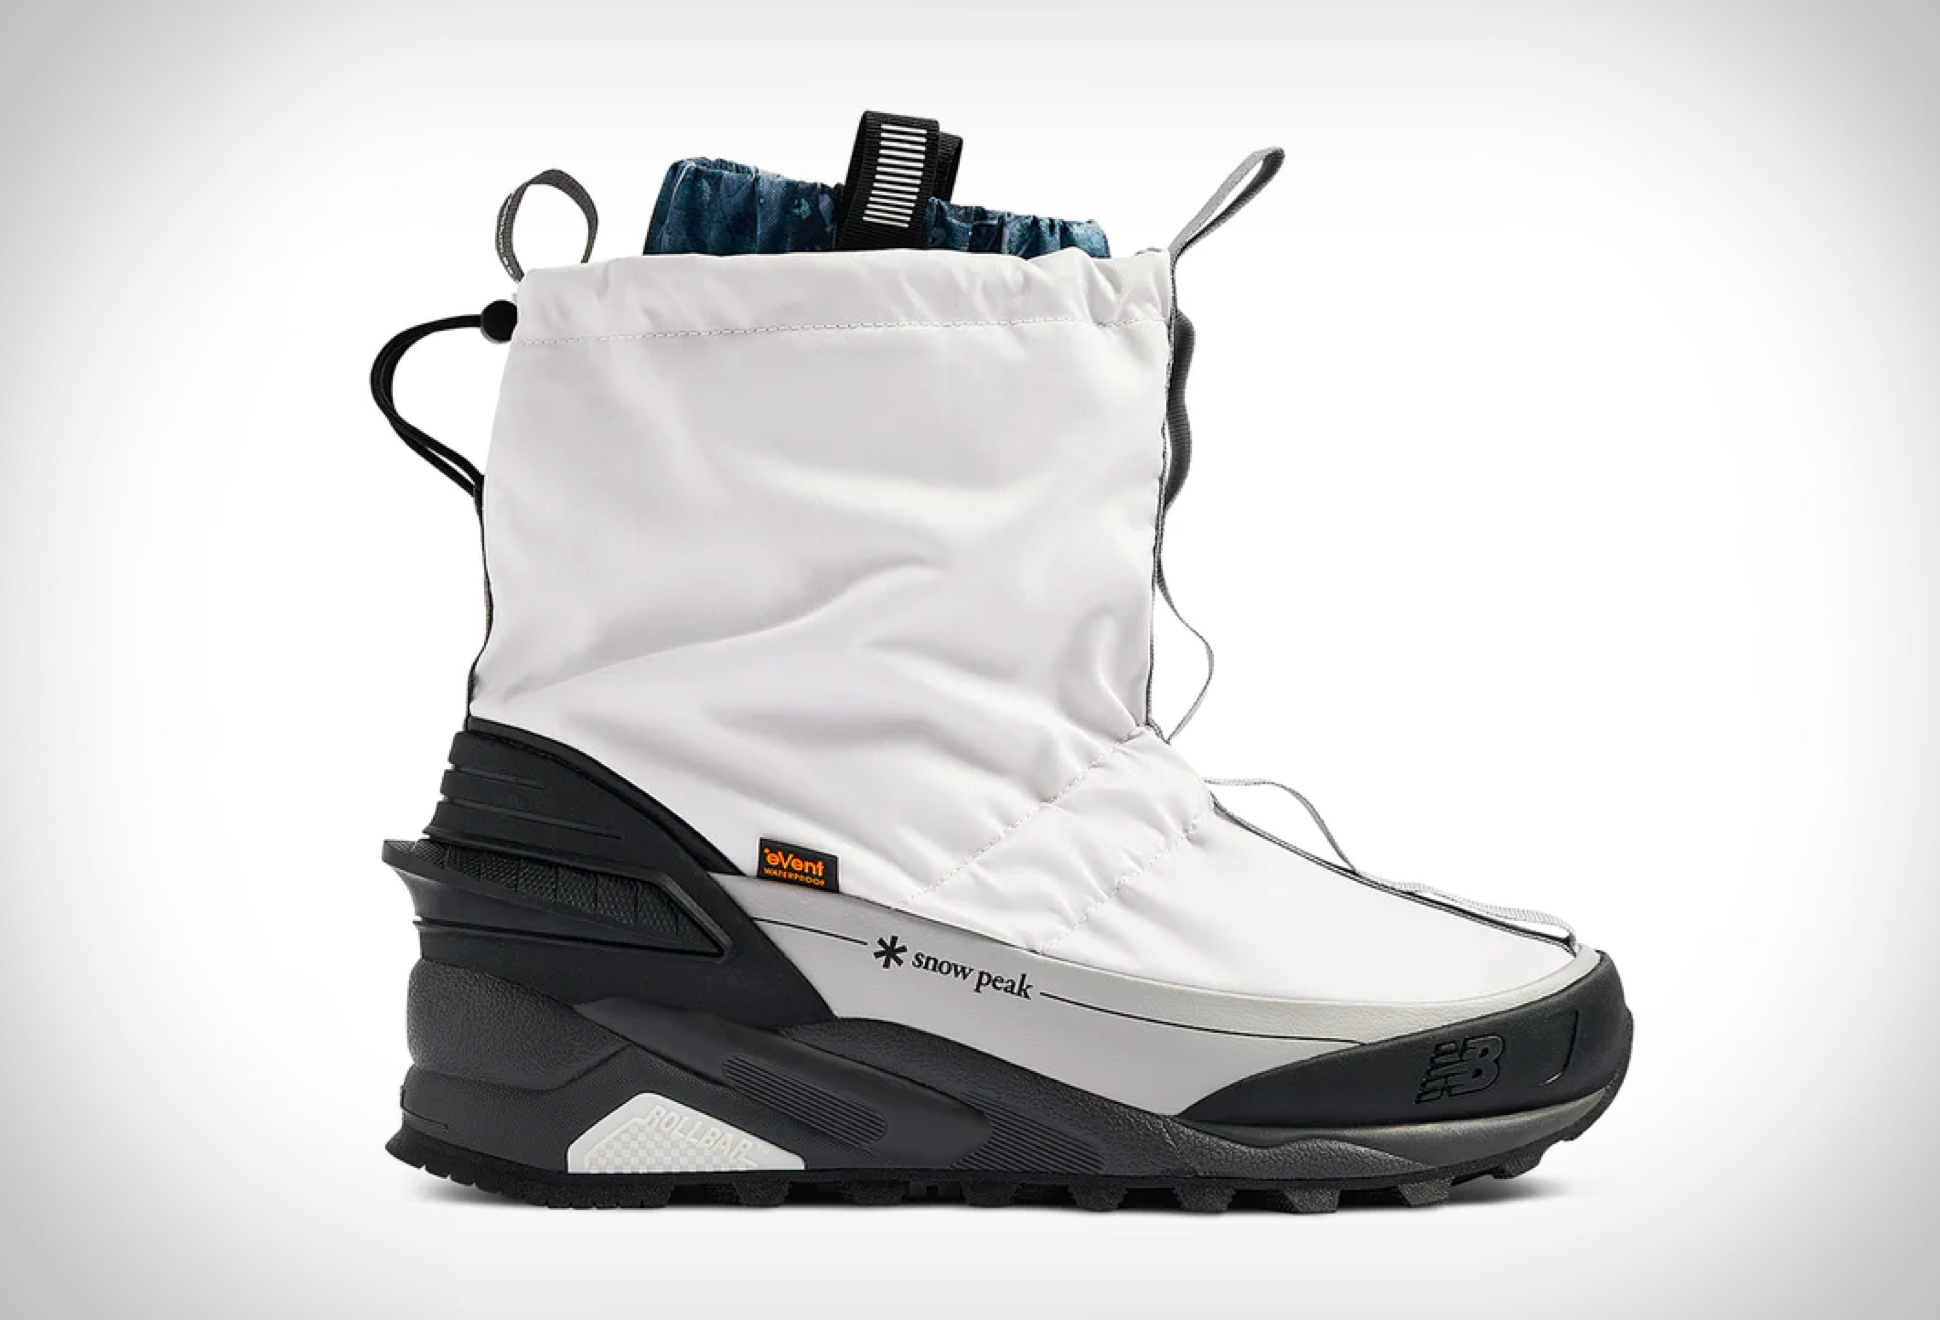 New Balance x Snow Peak Boots | Image